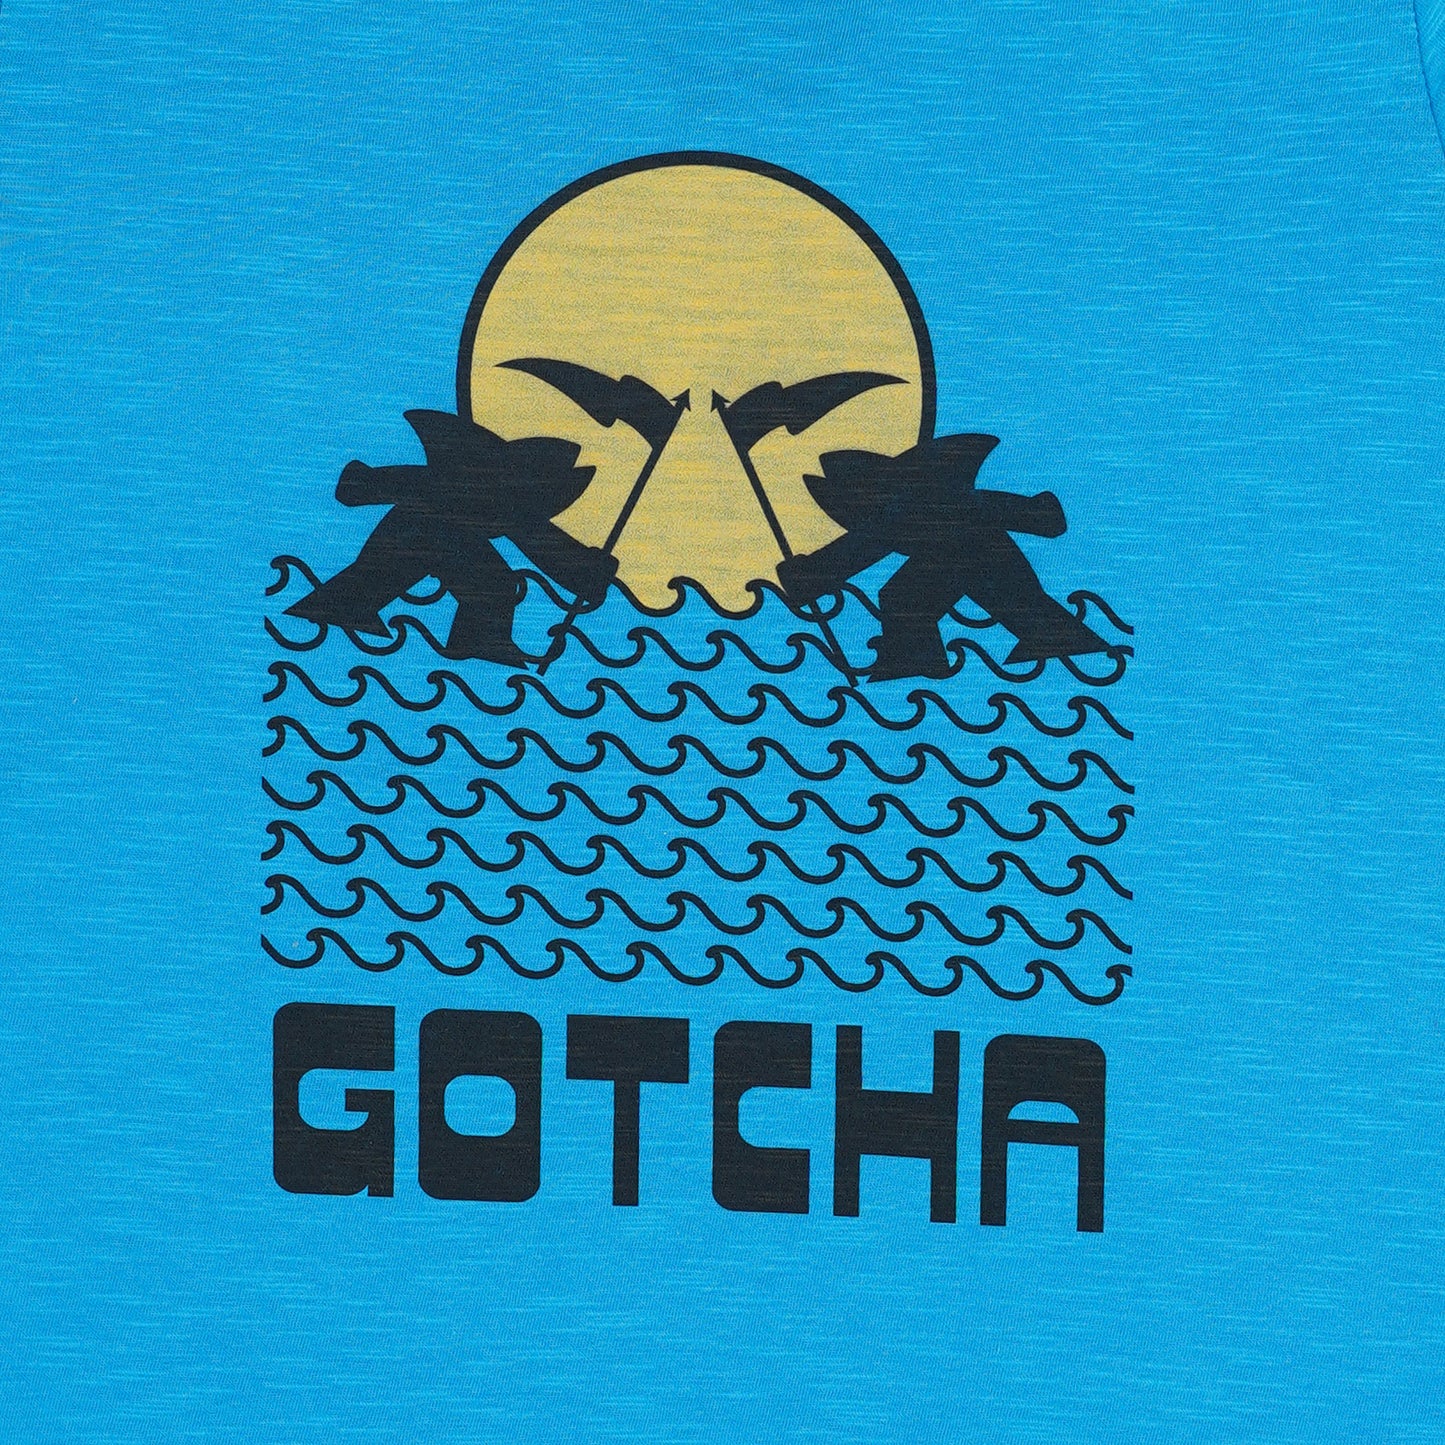 Gotcha dubai logo on a kids Tshirt